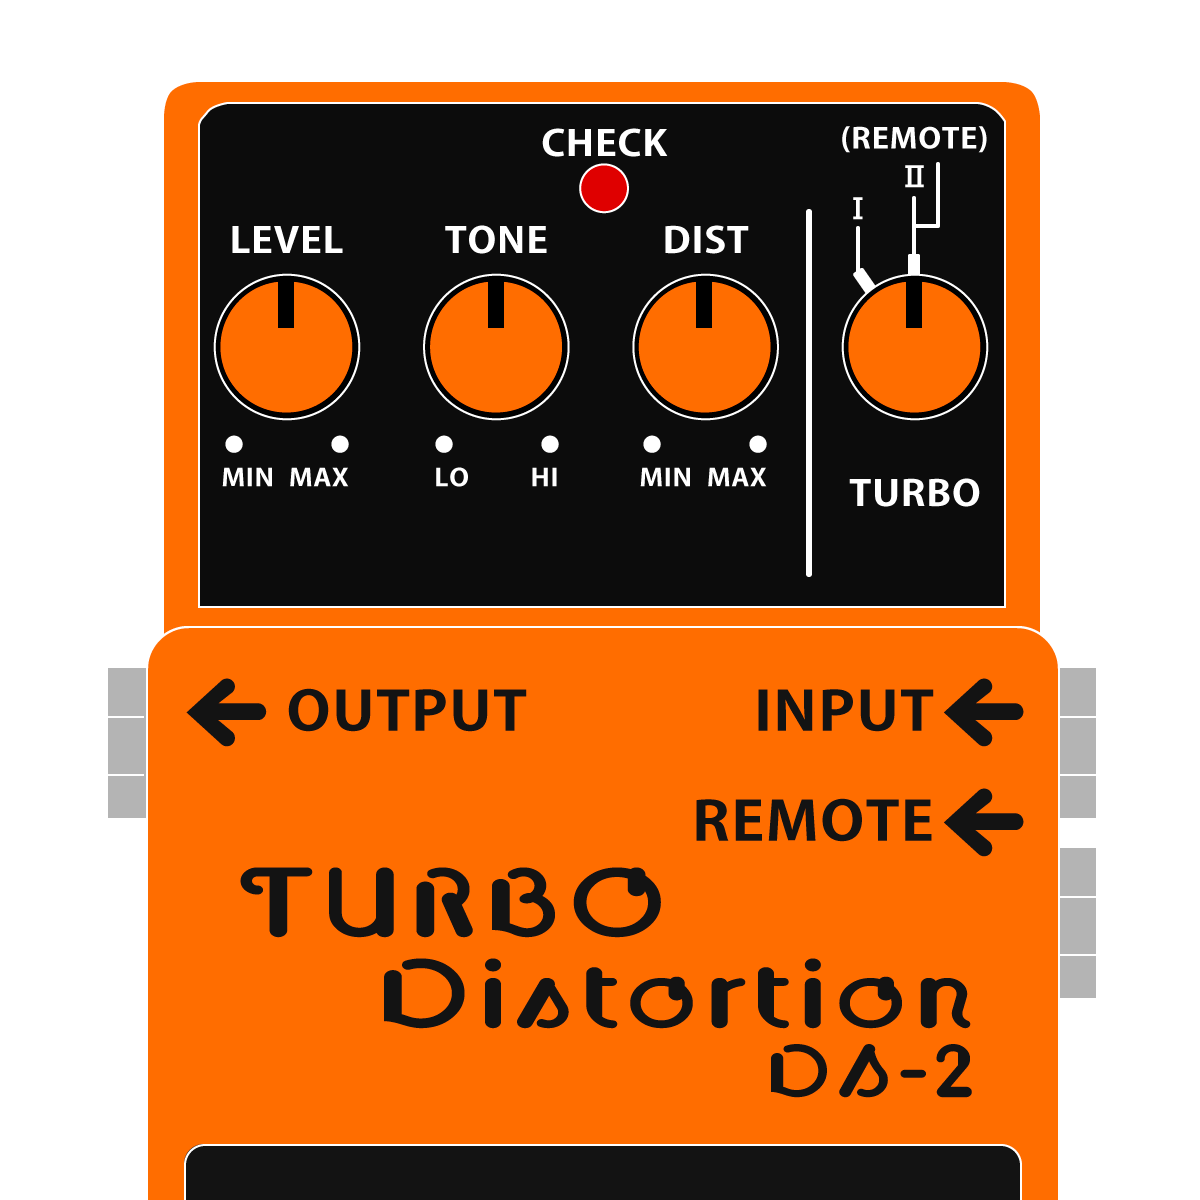 DS-2 TURBO Distortion（ターボディストーション）